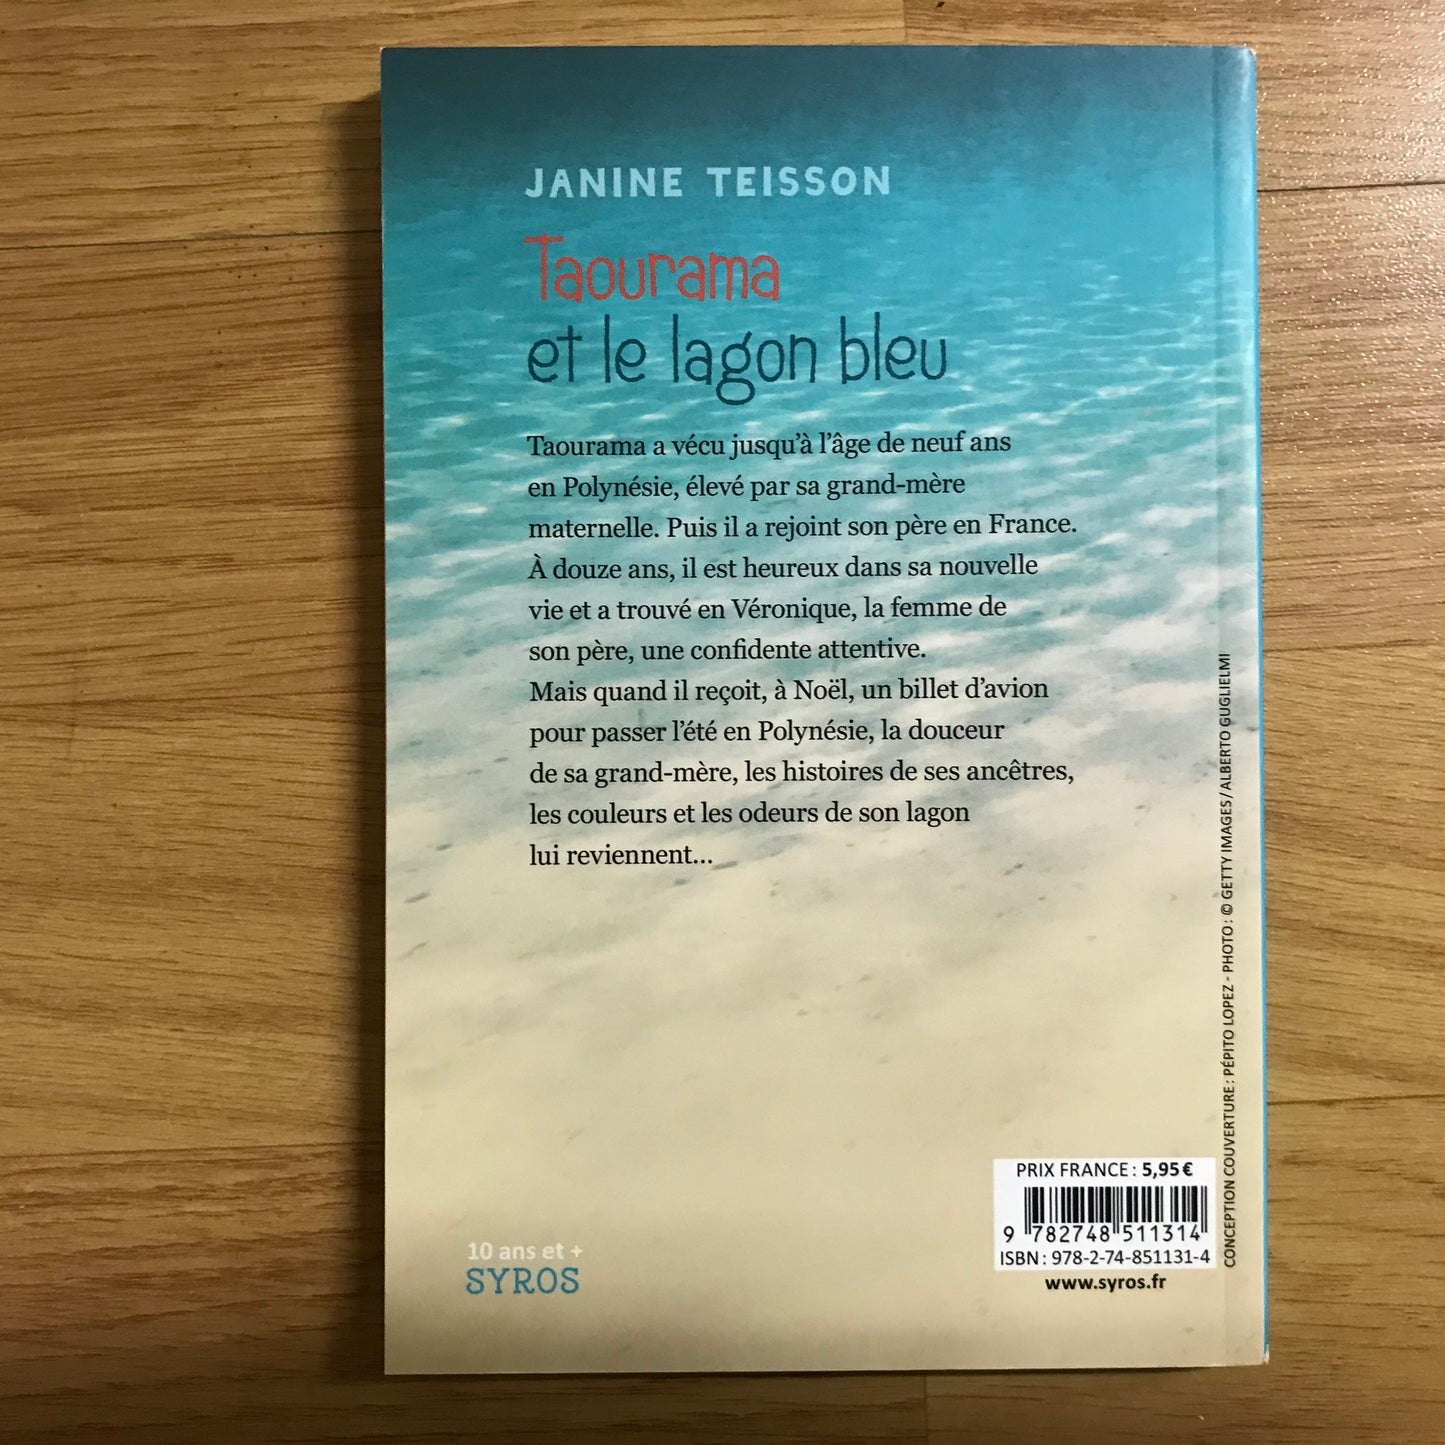 Teisson, Janine - Taourama et le lagon bleu